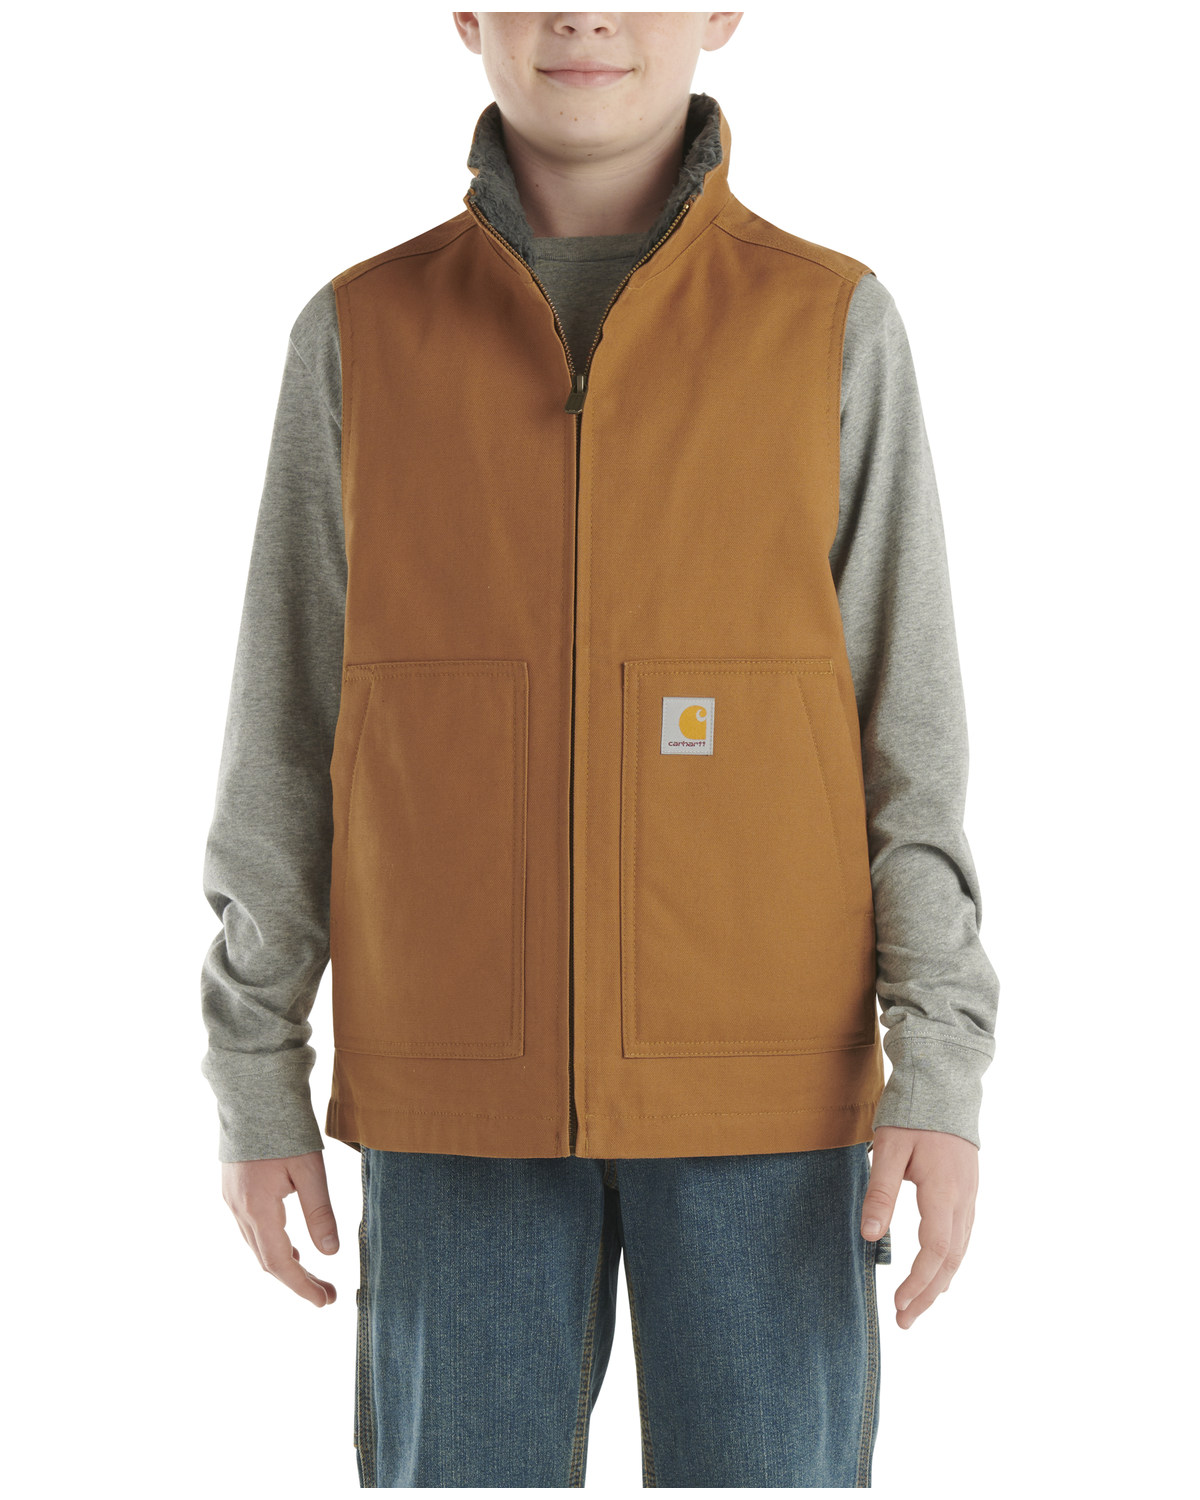 Carhartt Little Boys' Canvas Sherpa Lined Vest